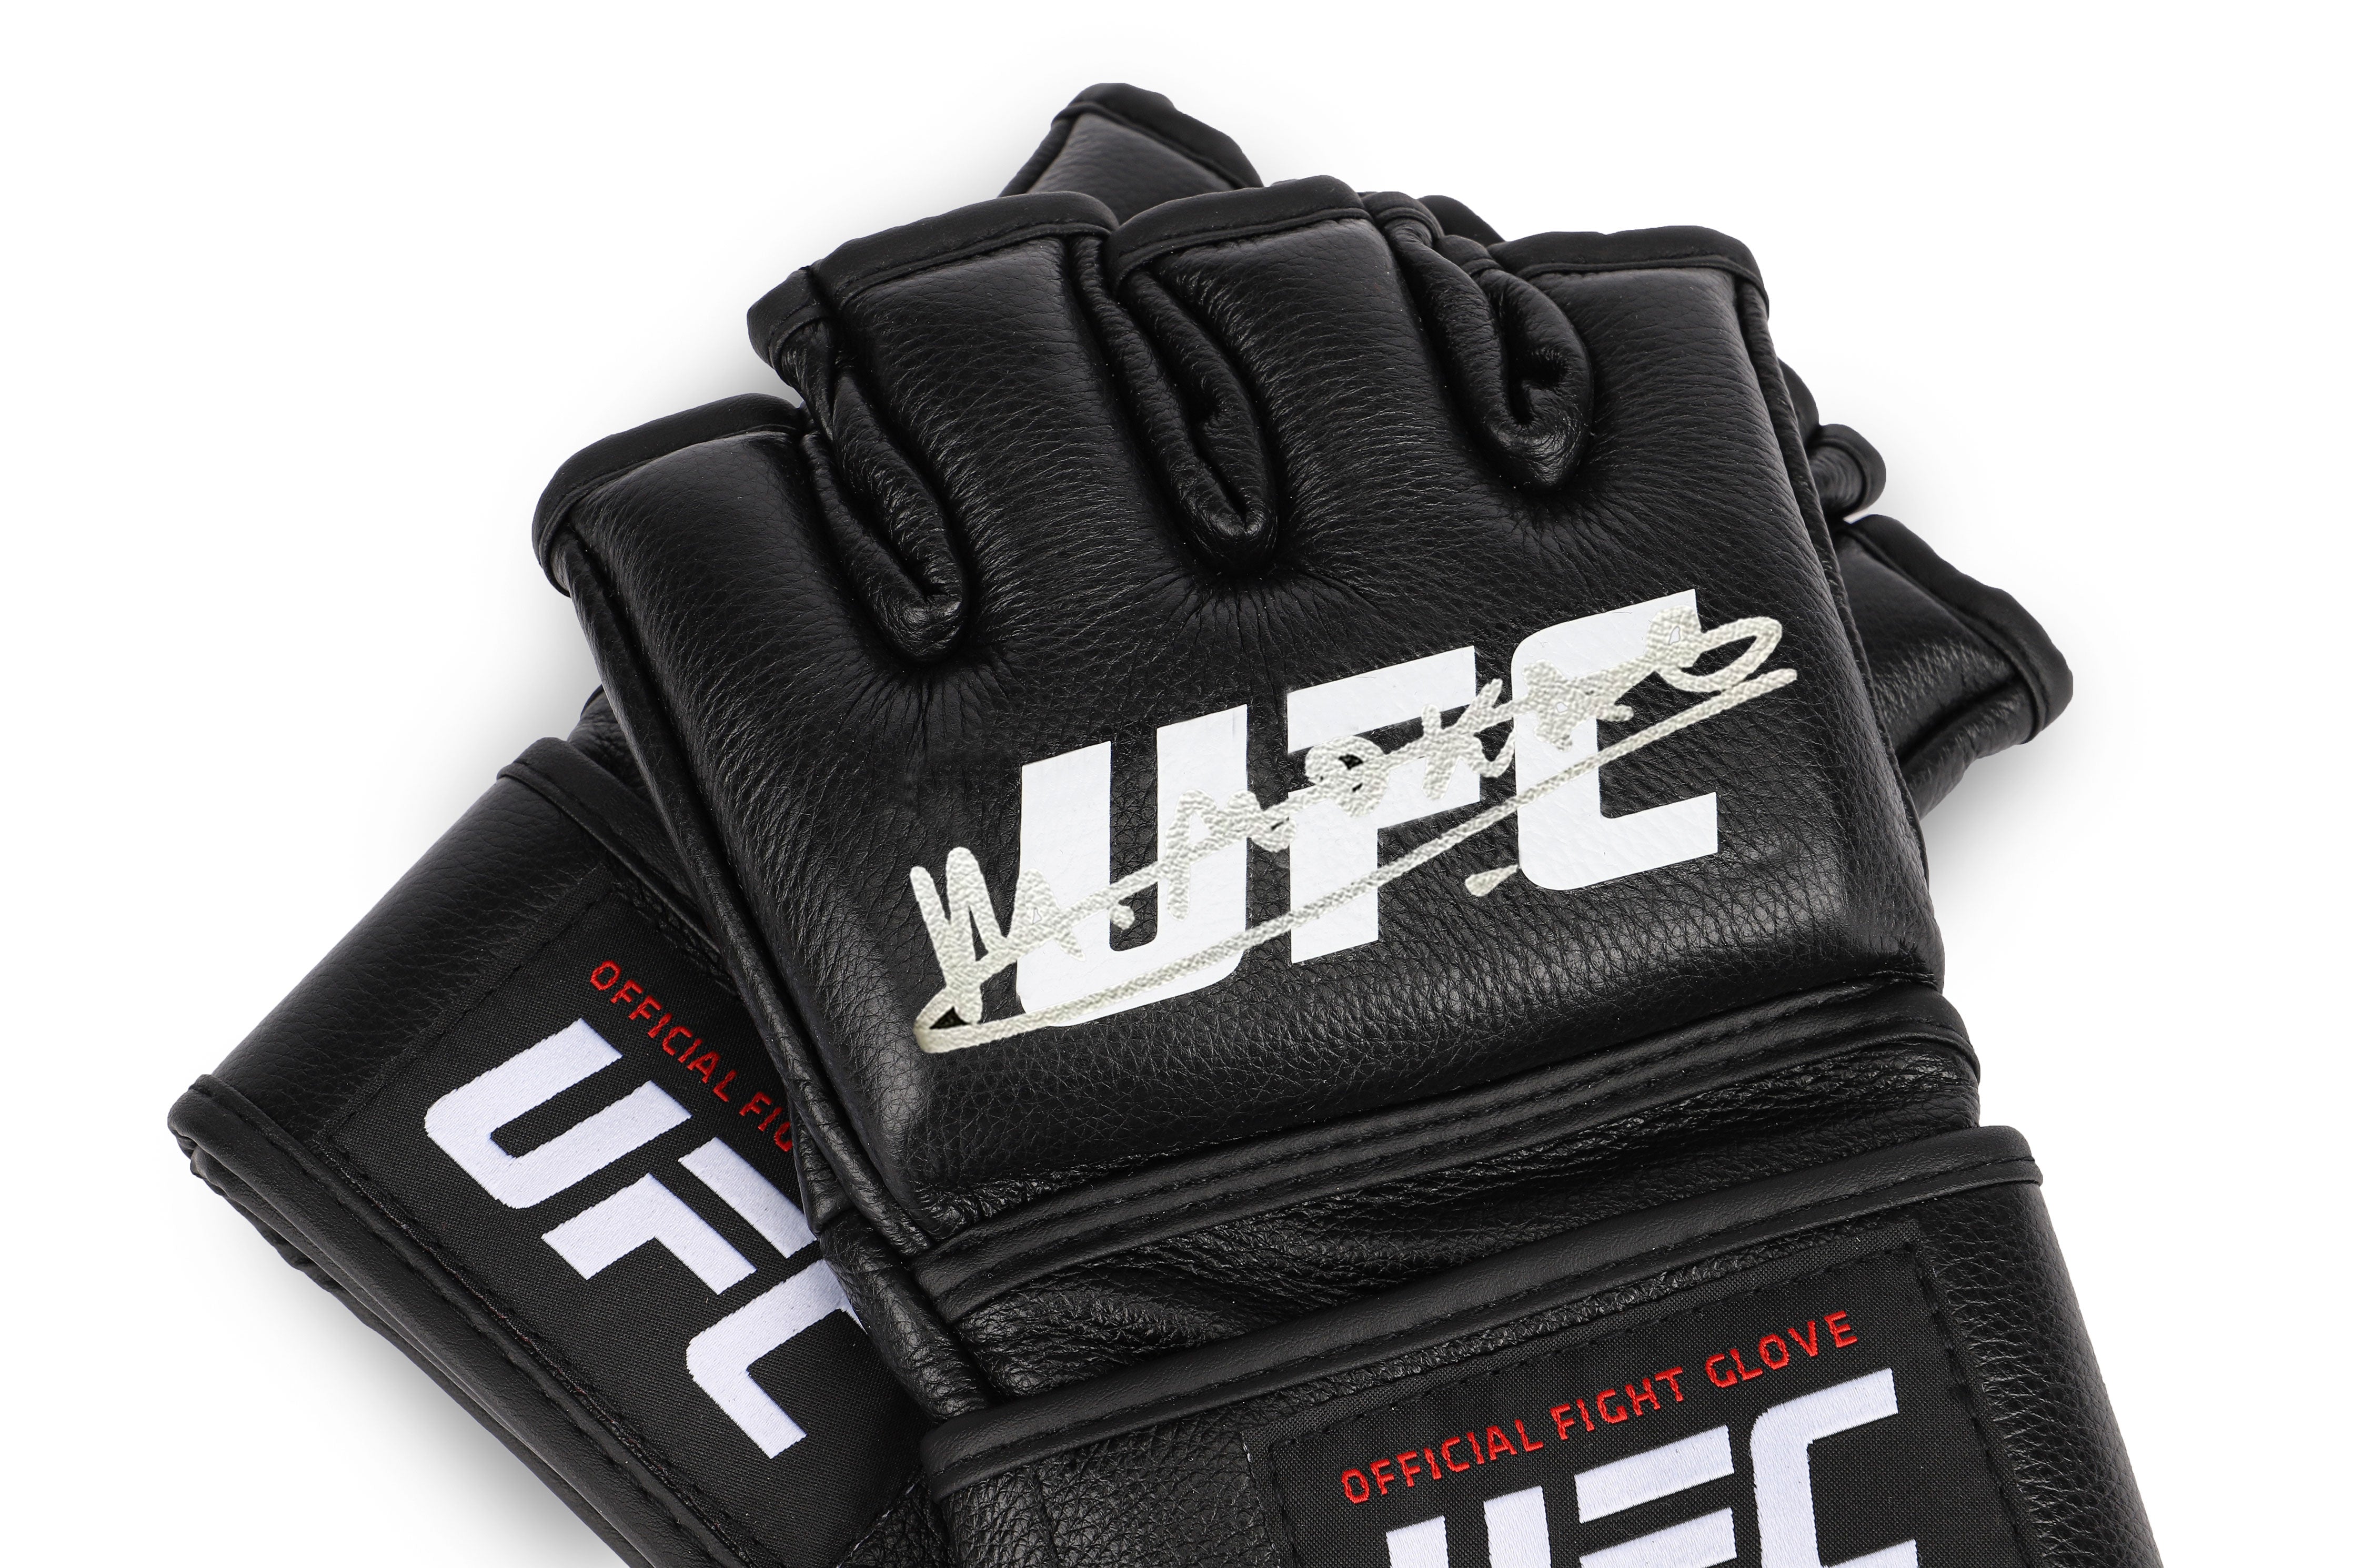 Muhammad Mokaev Signed Official UFC Gloves